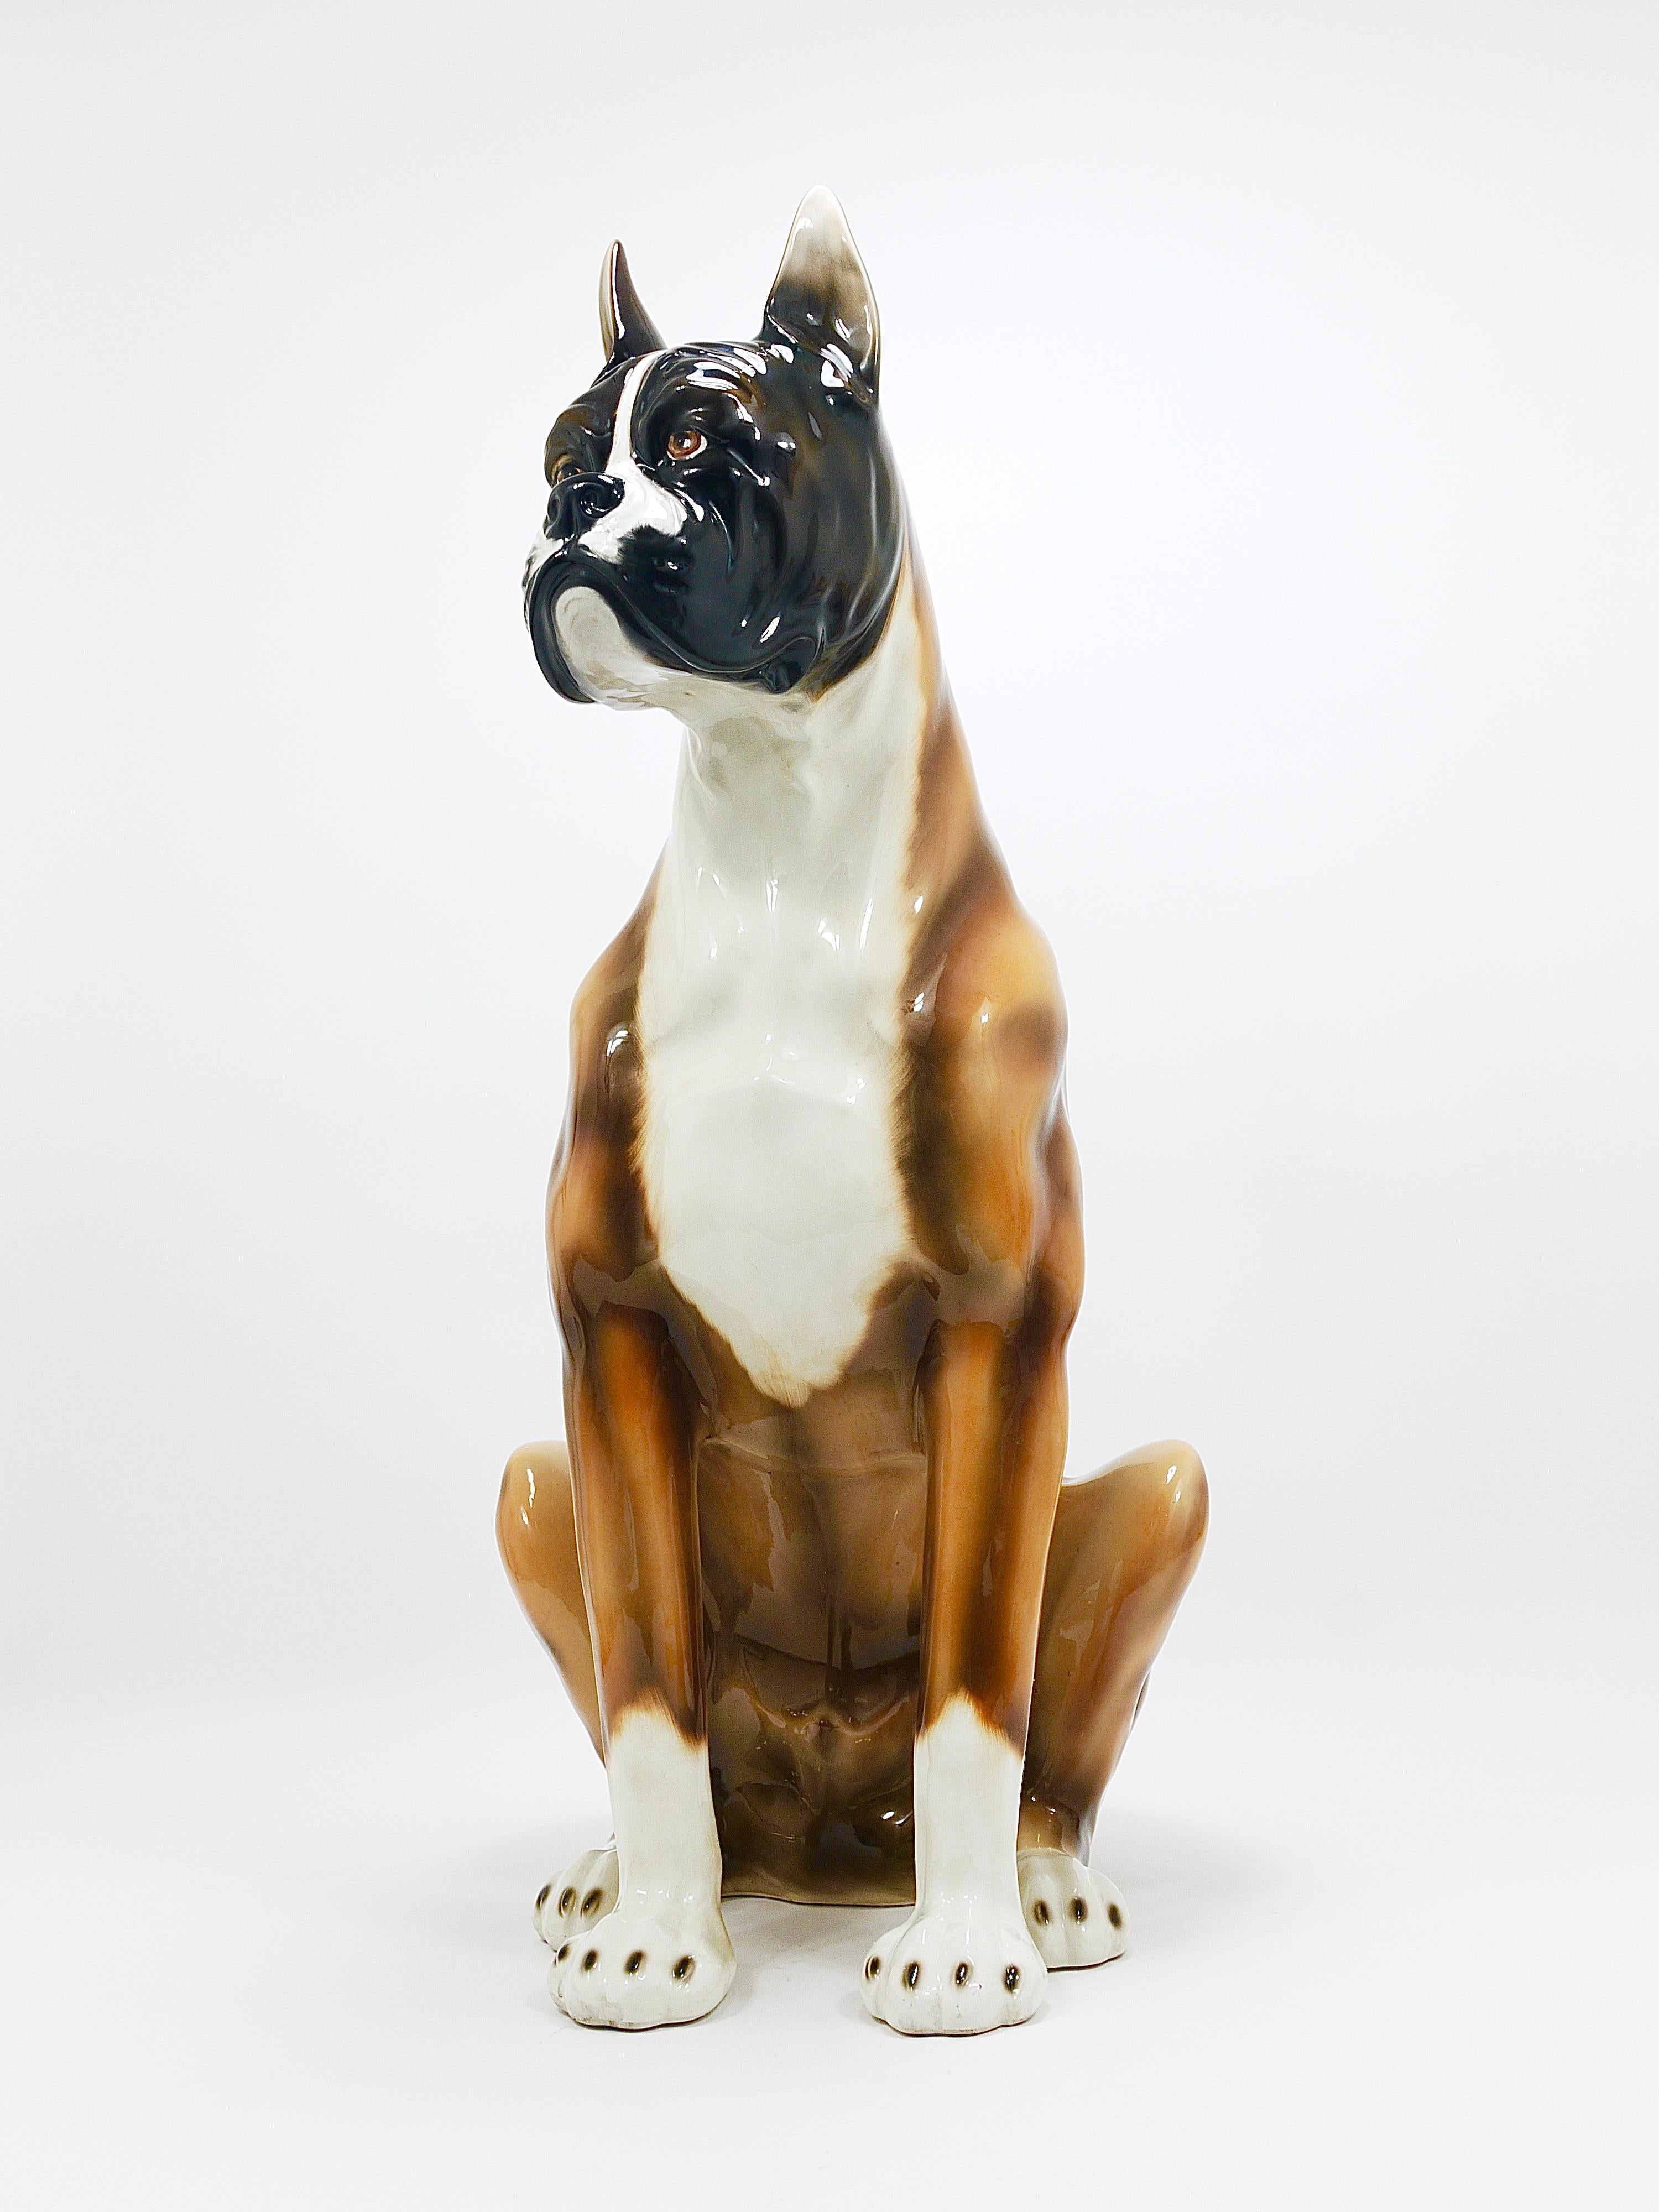 Boxer Dog Life-Size Majolica Statue Sculpture, Glazed Ceramic, Italy, 1970s For Sale 4